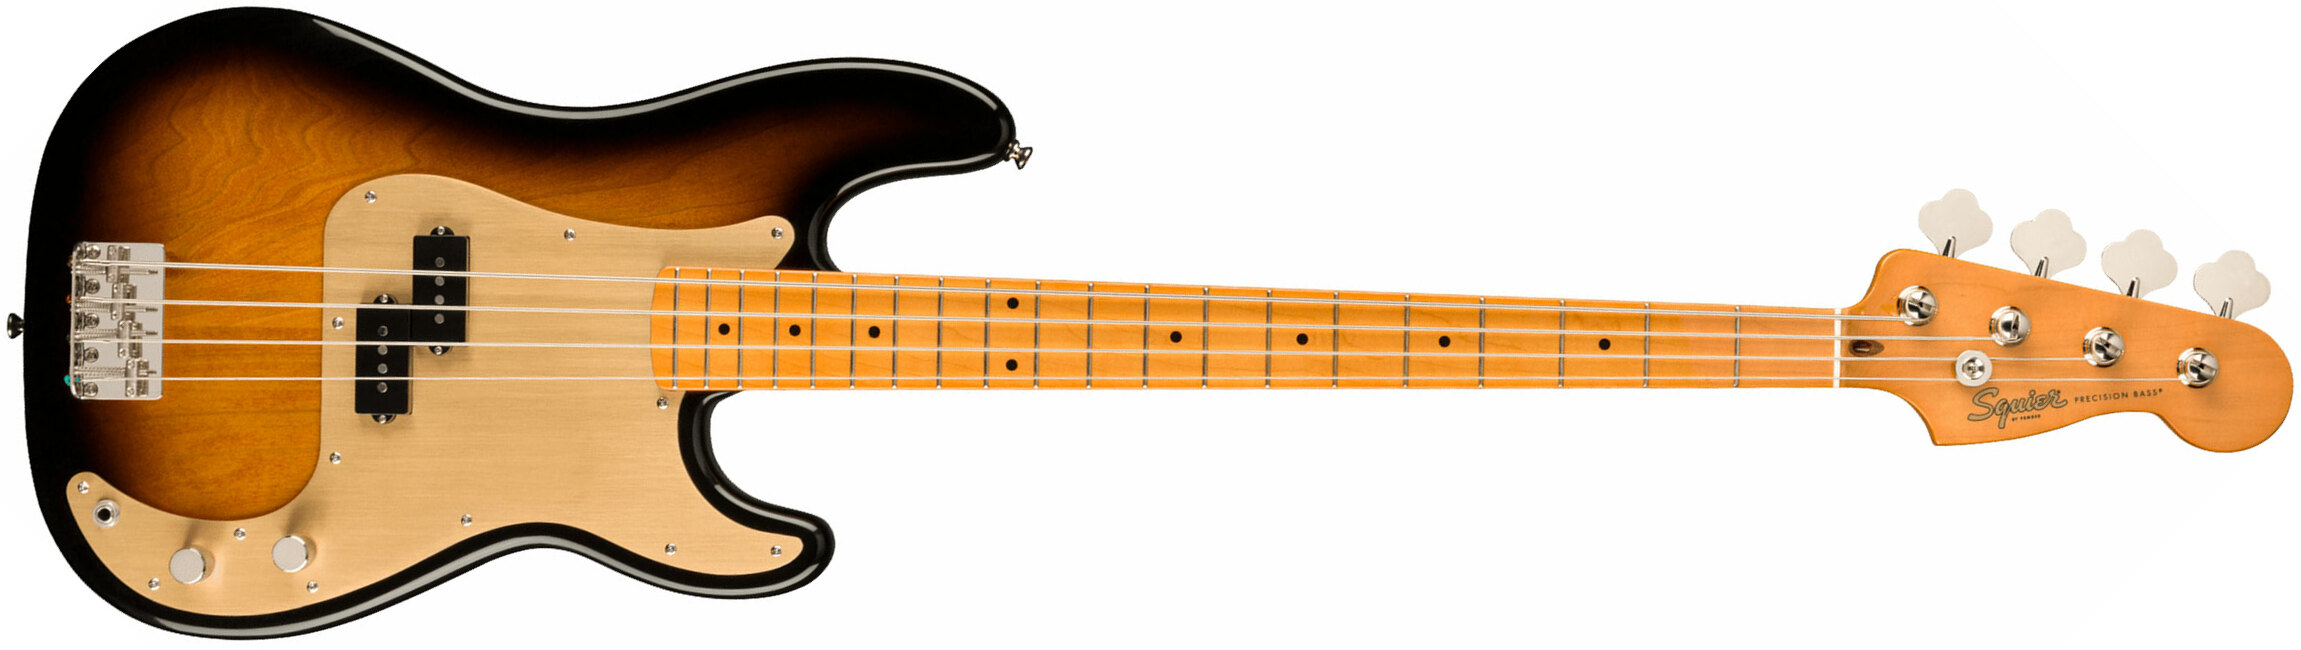 Squier Precision Bass Late '50s Classic Vibe Fsr Ltd Mn - 2-color Sunburst - Bajo eléctrico de cuerpo sólido - Main picture